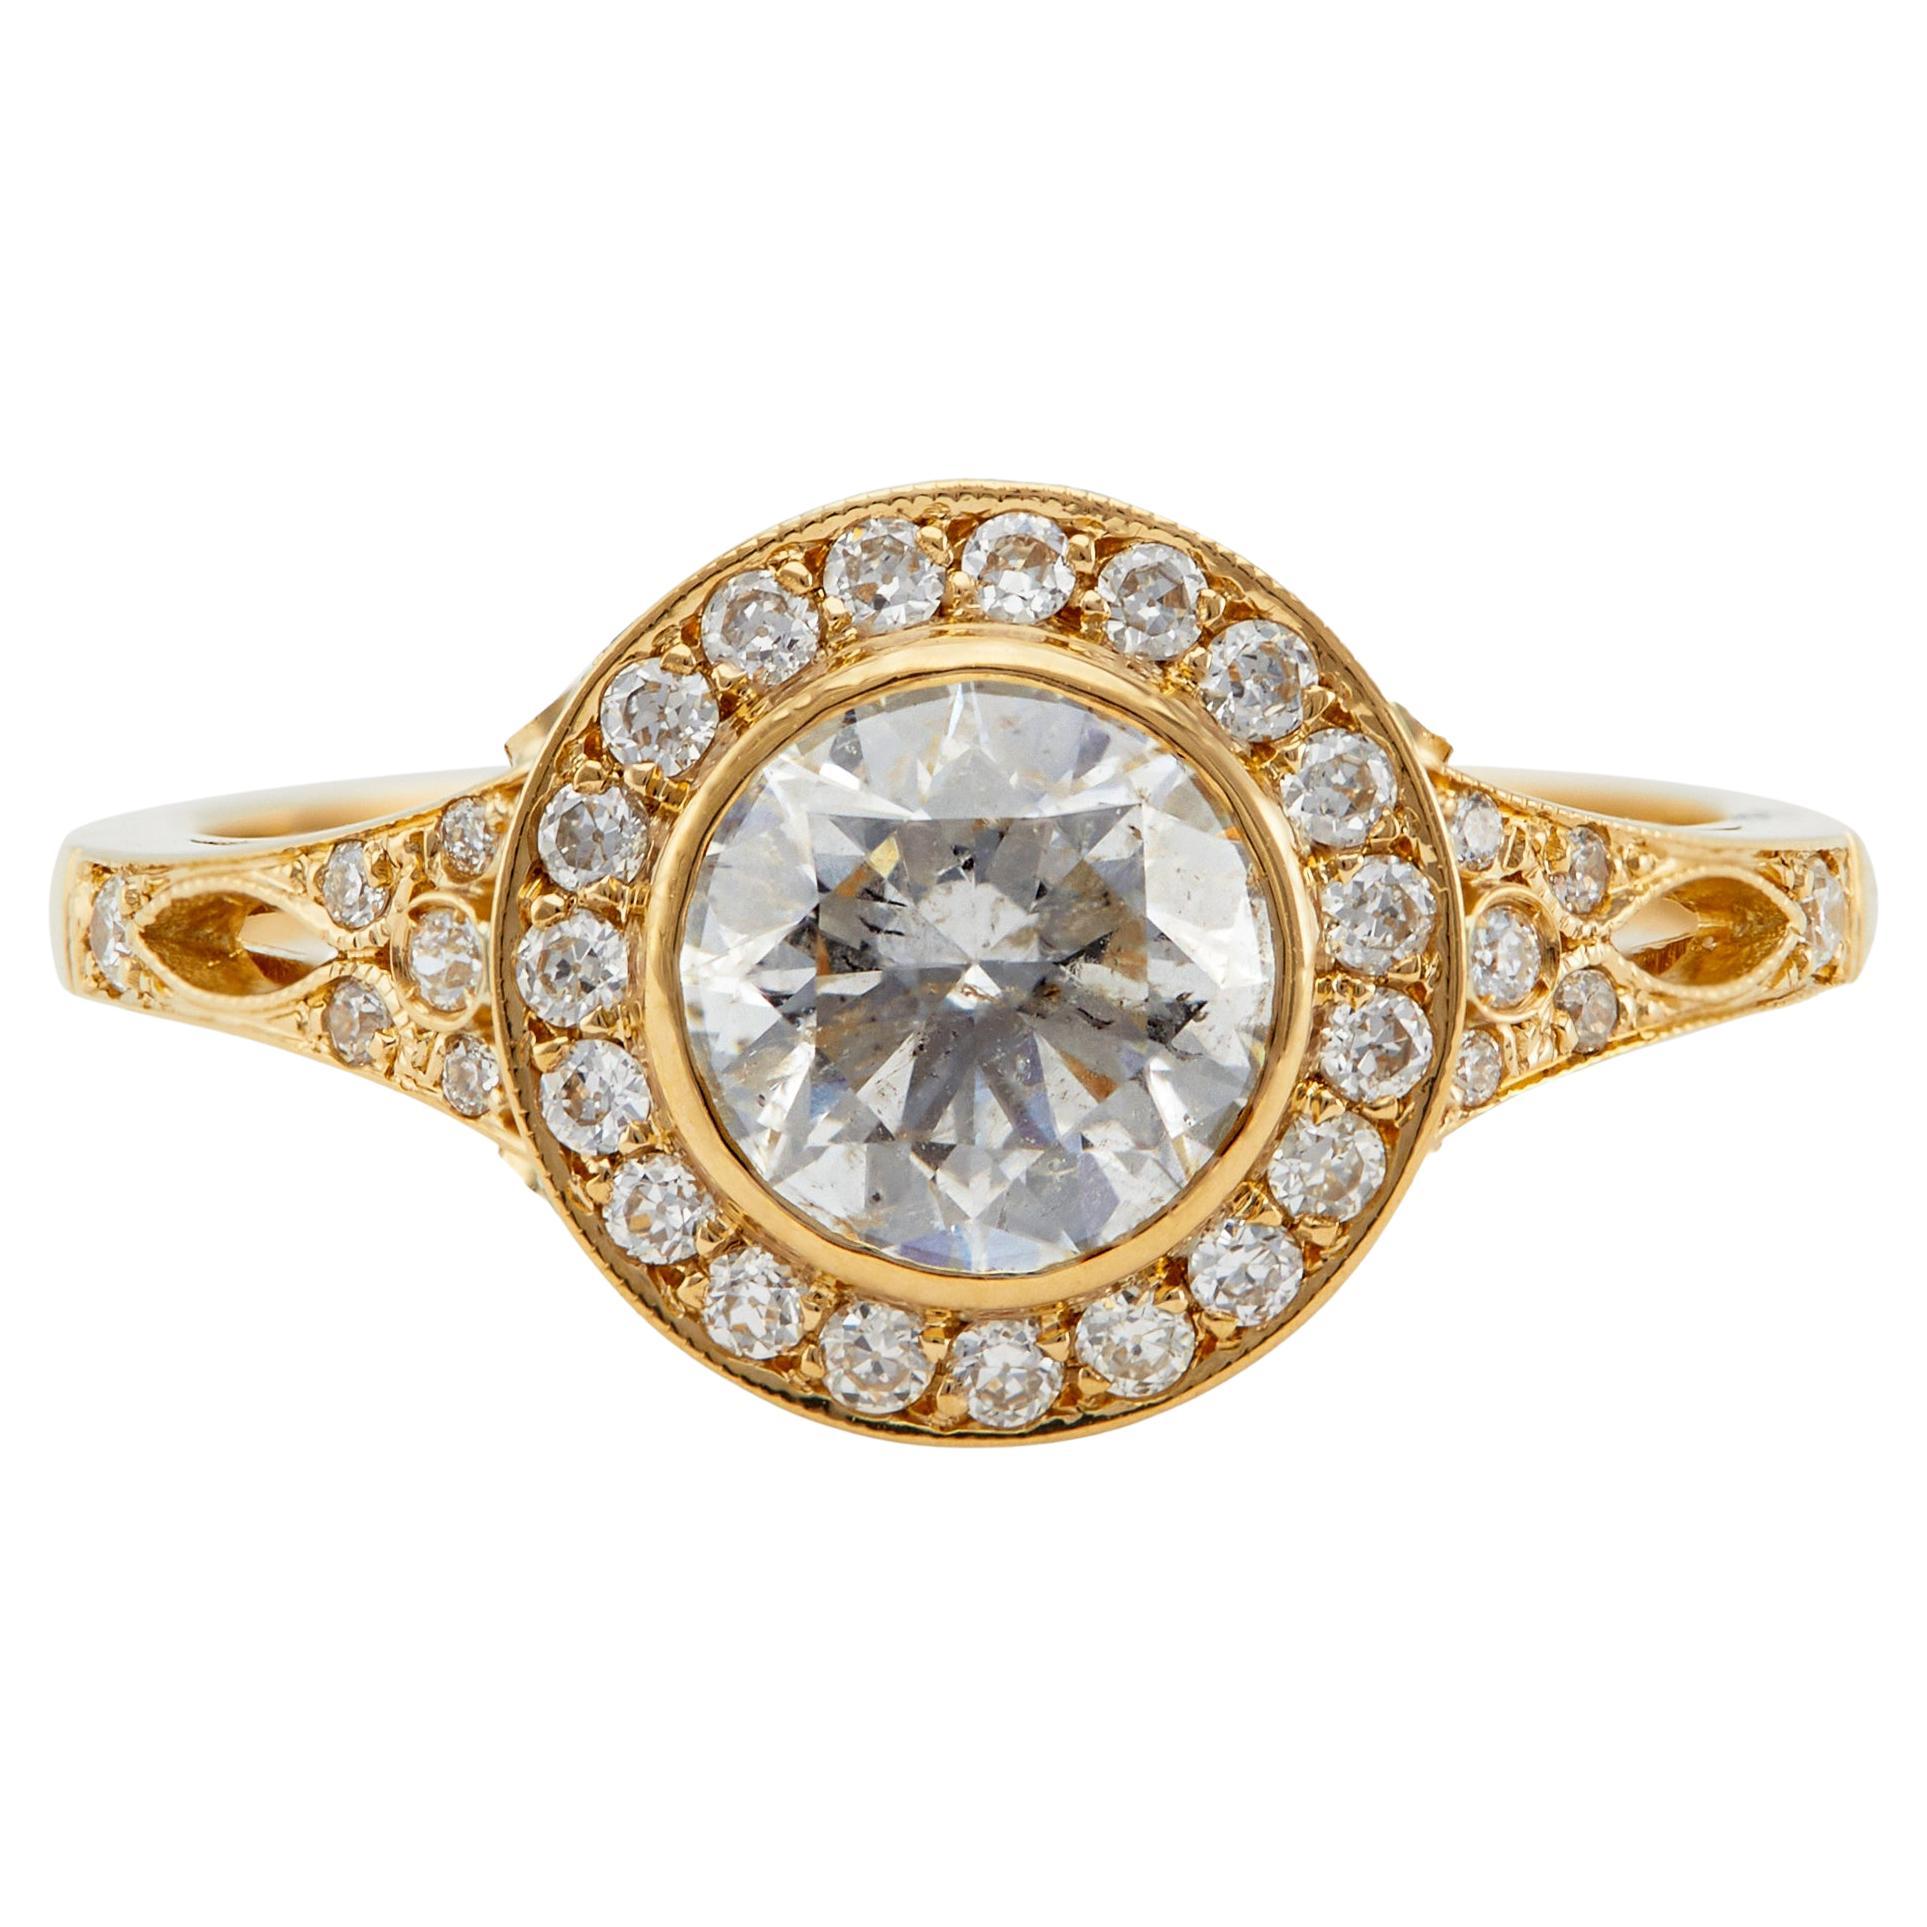 Antique Inspired GIA 1.01 Round Brilliant Cut Diamond 18k Yellow Gold Ring